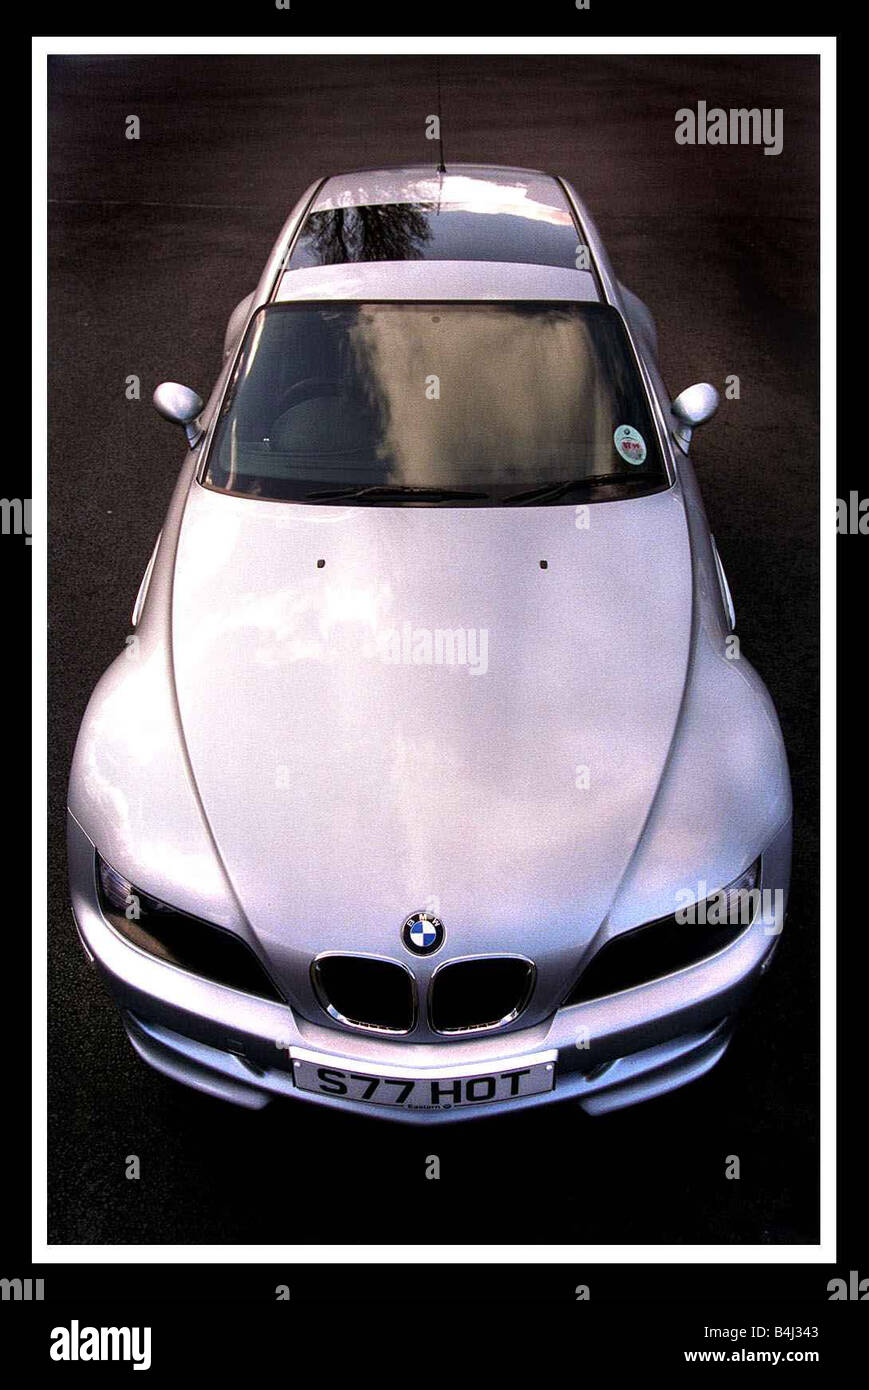 BMW Z3 Coupe April 1999 Stock Photo